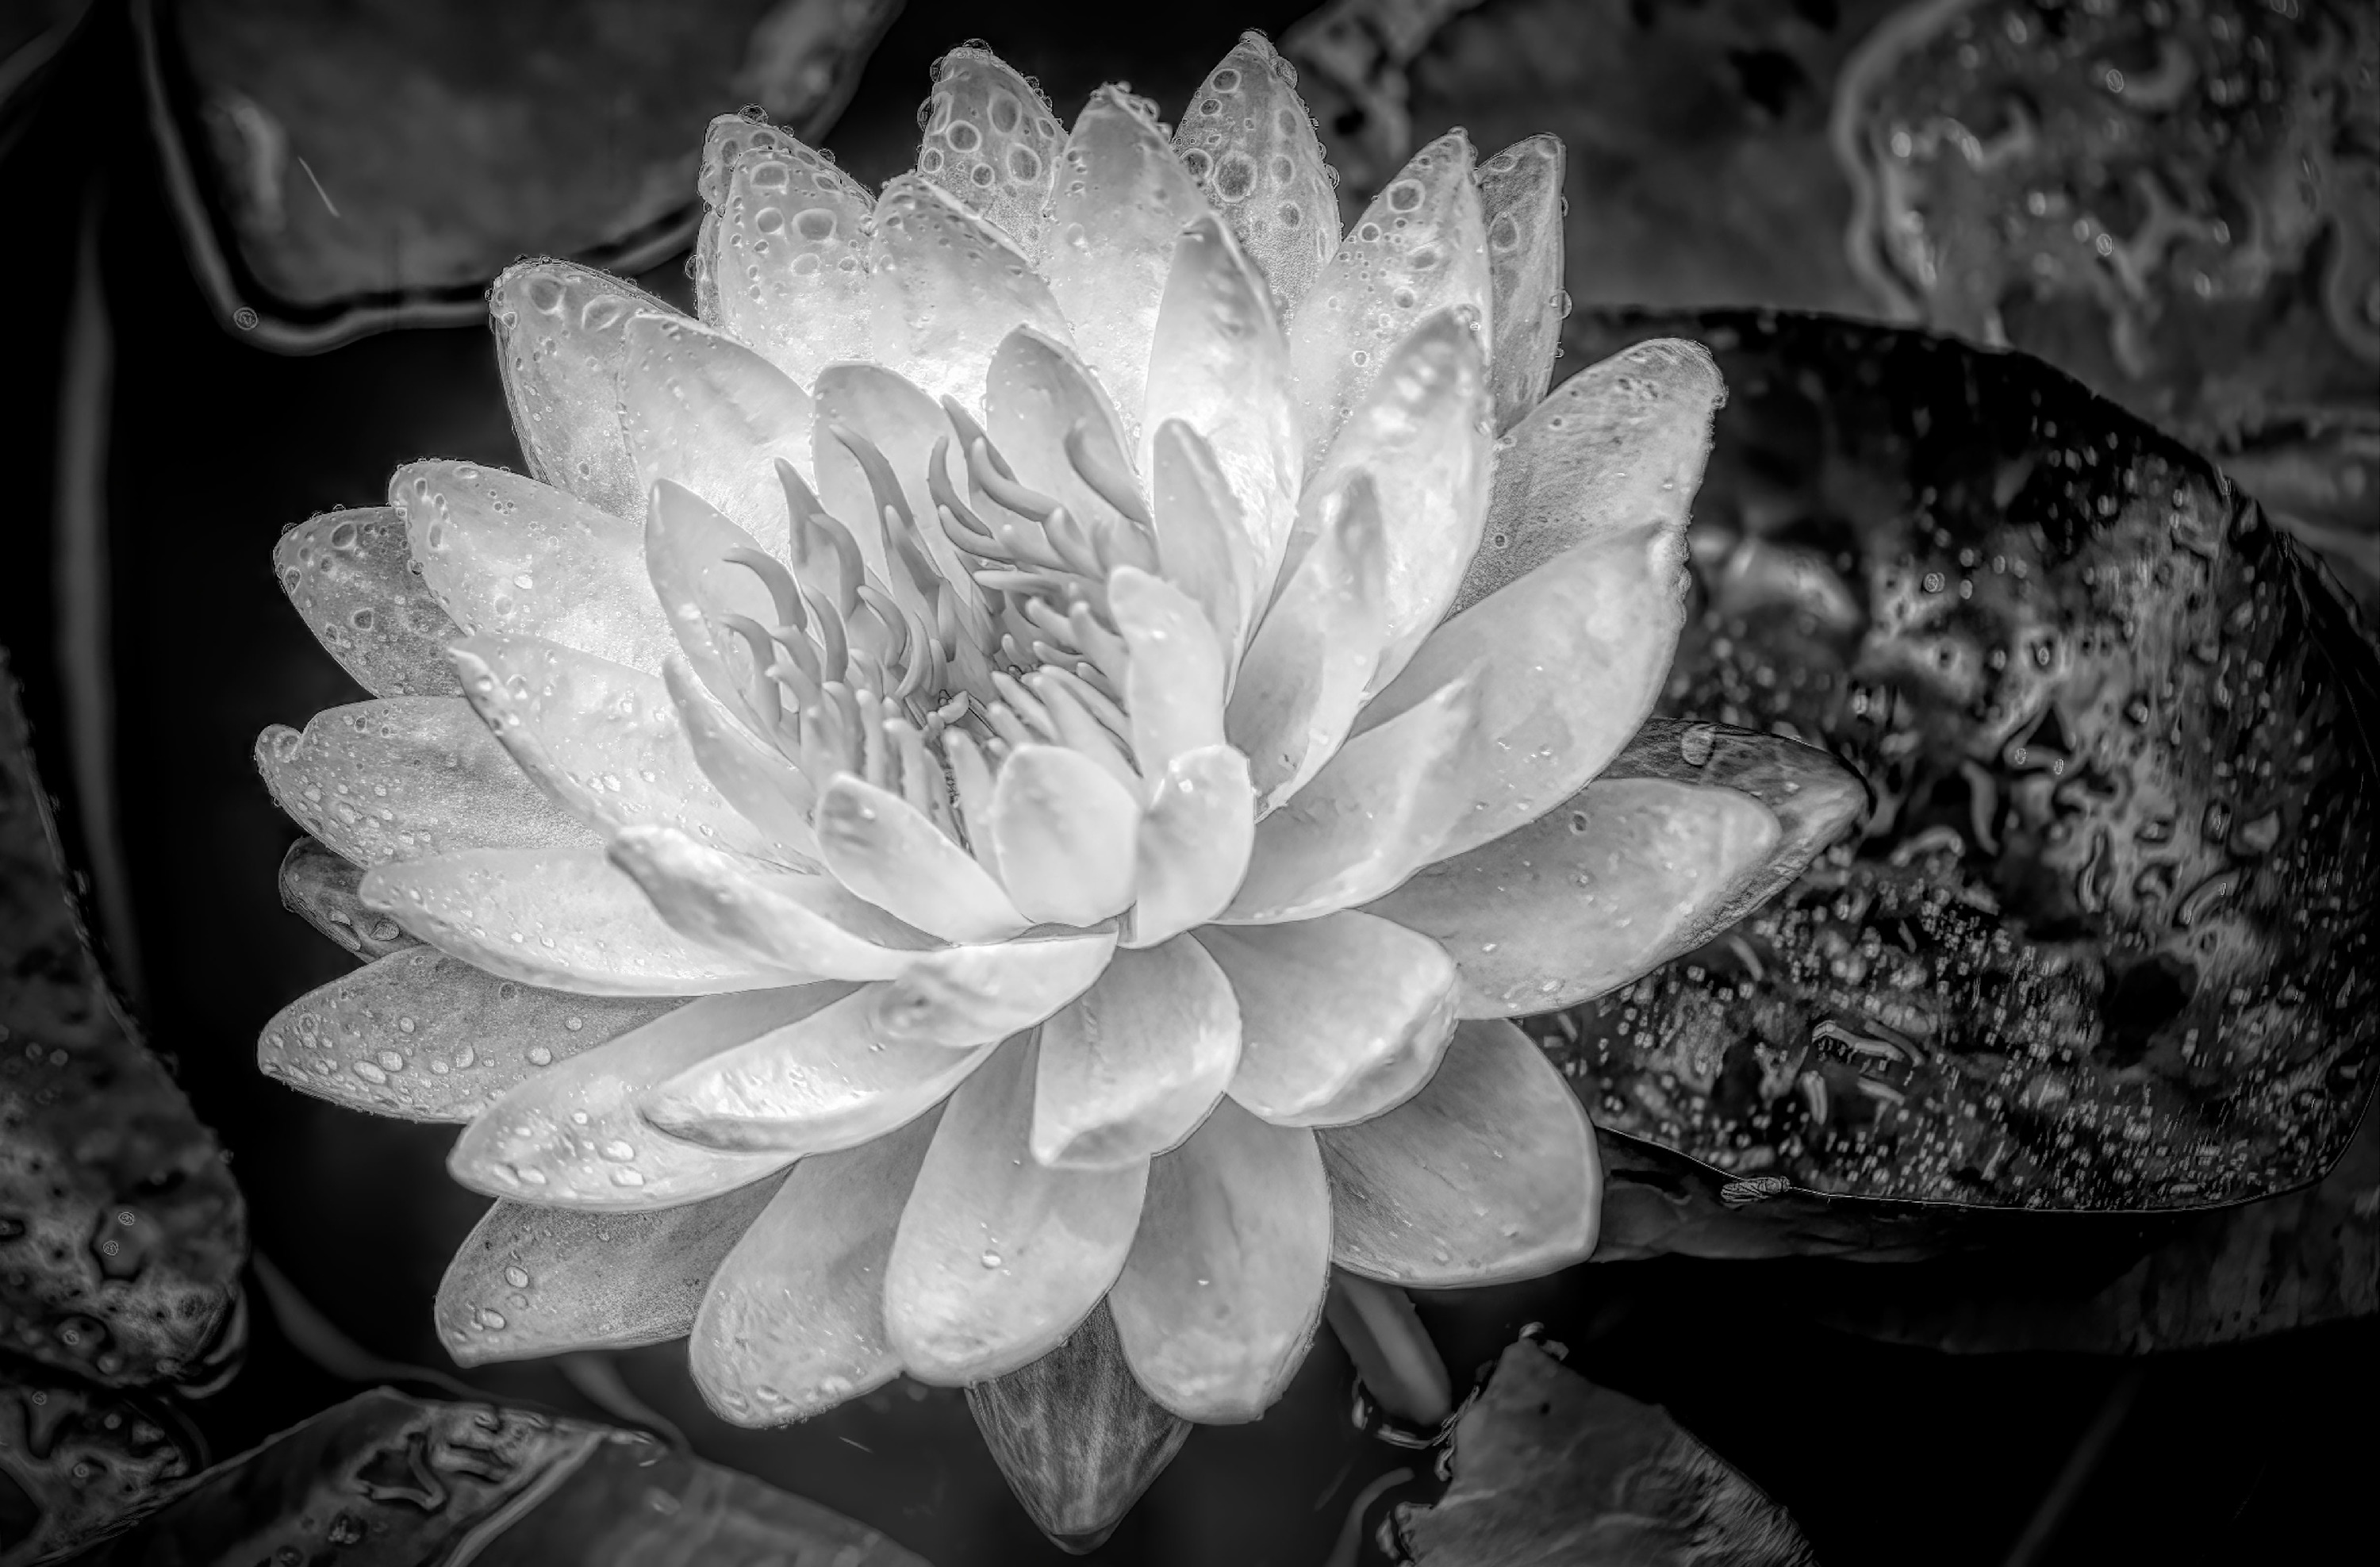 White water flower dramatic black and white pepge5 sg8plx